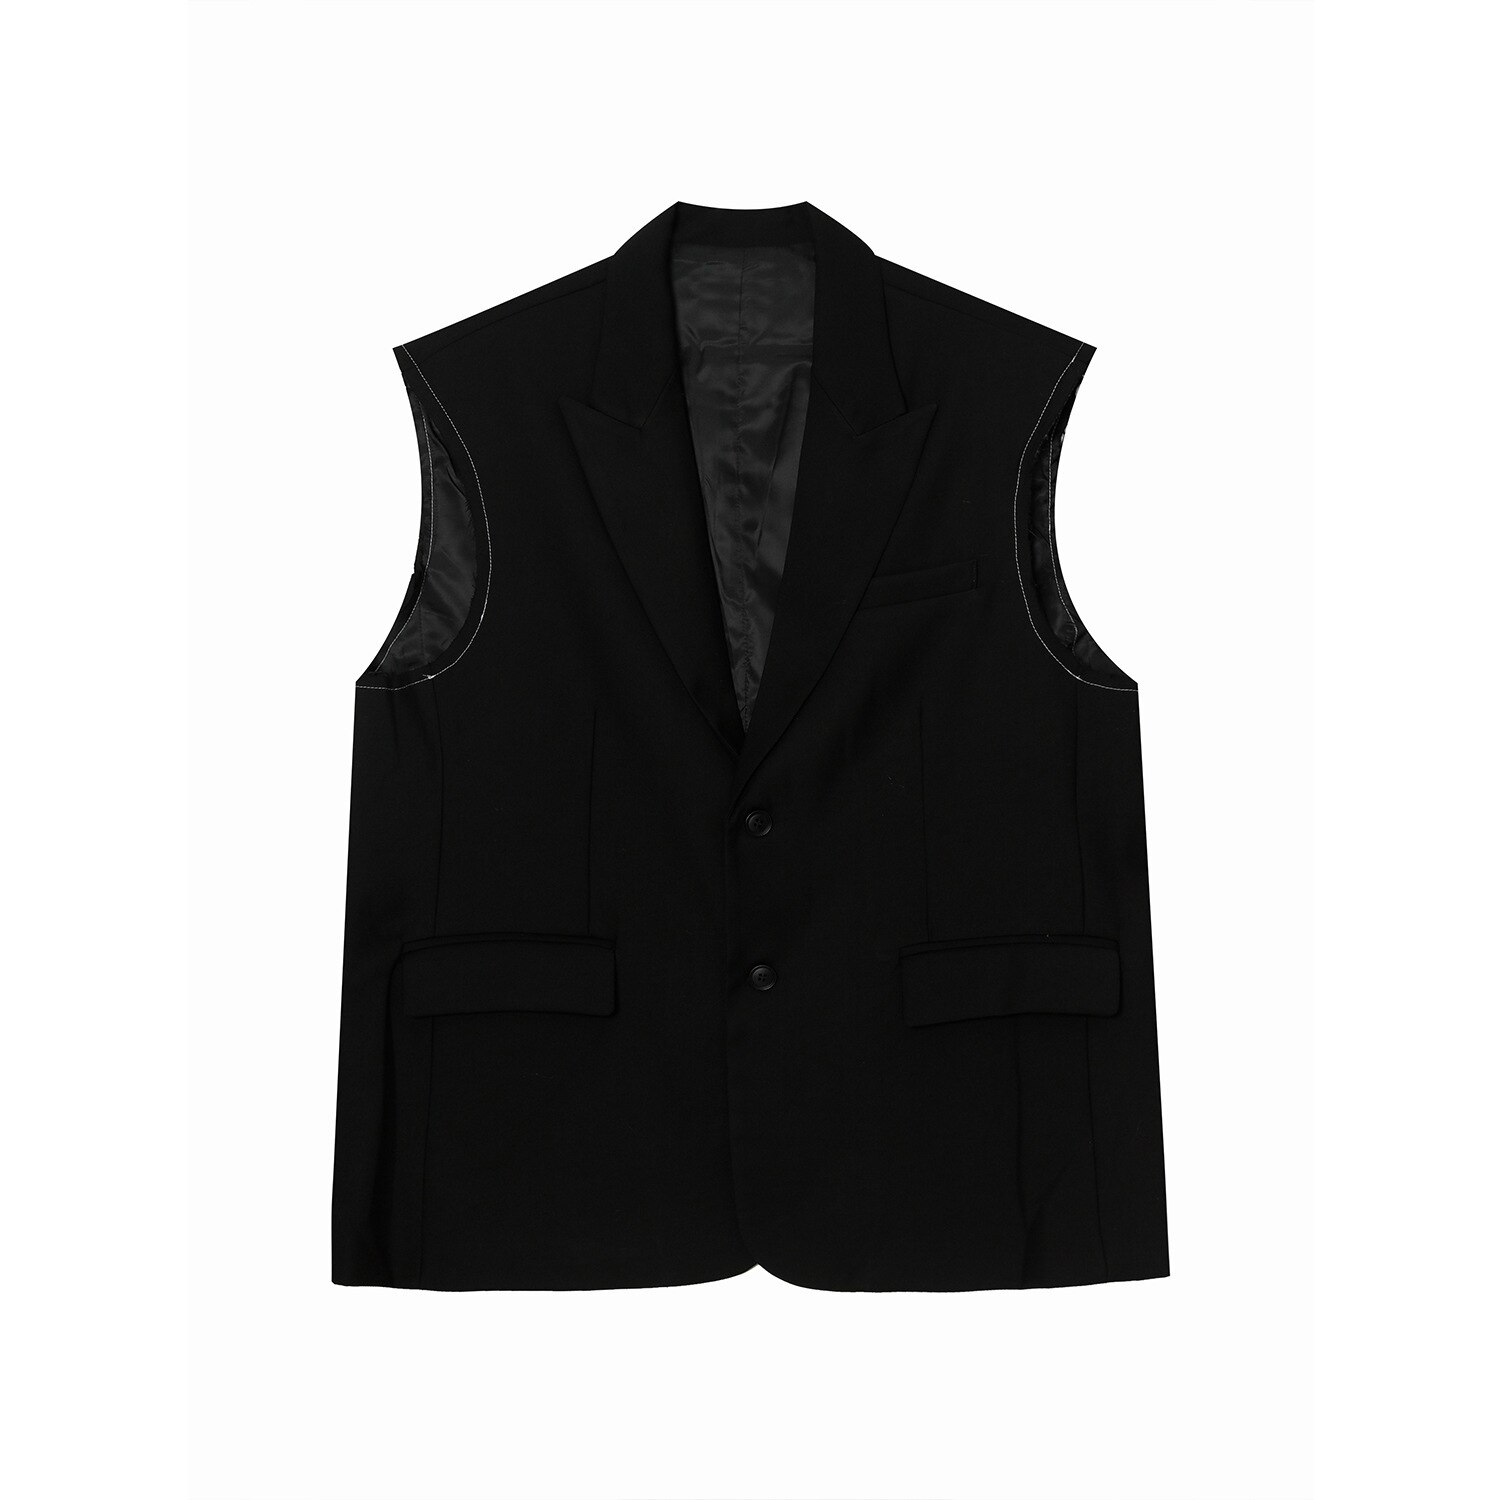 Iefb Herenkleding Lente Causale Pak Vest Koreaanse Mode Ins Losse Casual Vest Met Pocket Grey Mouwloze y5400: Black / XL